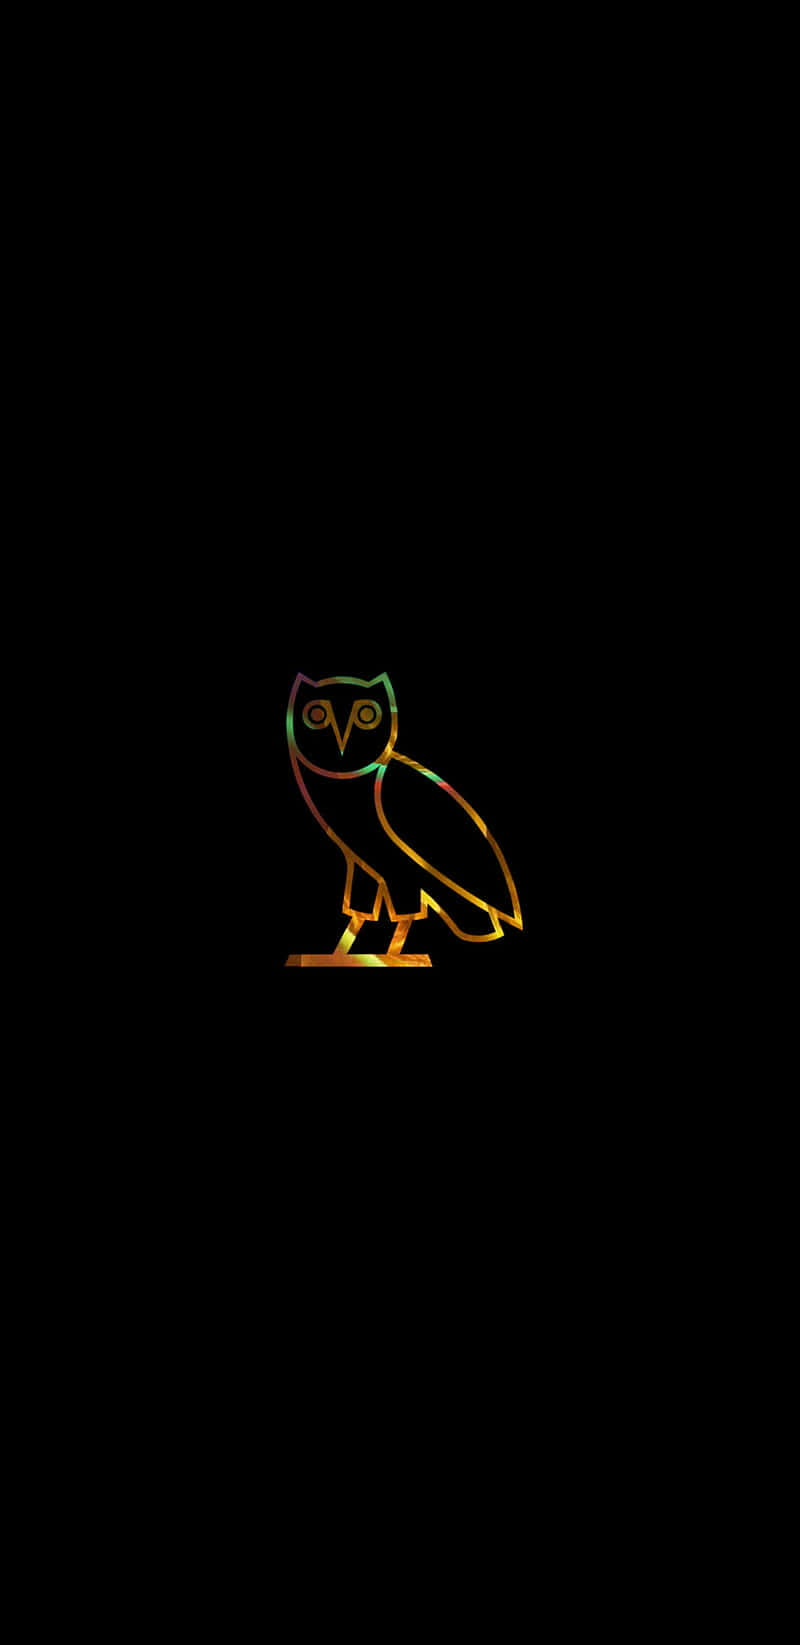 Celebraal Artista De Hip-hop Y Productor Drake Con Este Exclusivo Fondo De Pantalla Ovo Owl Para Iphone. Fondo de pantalla